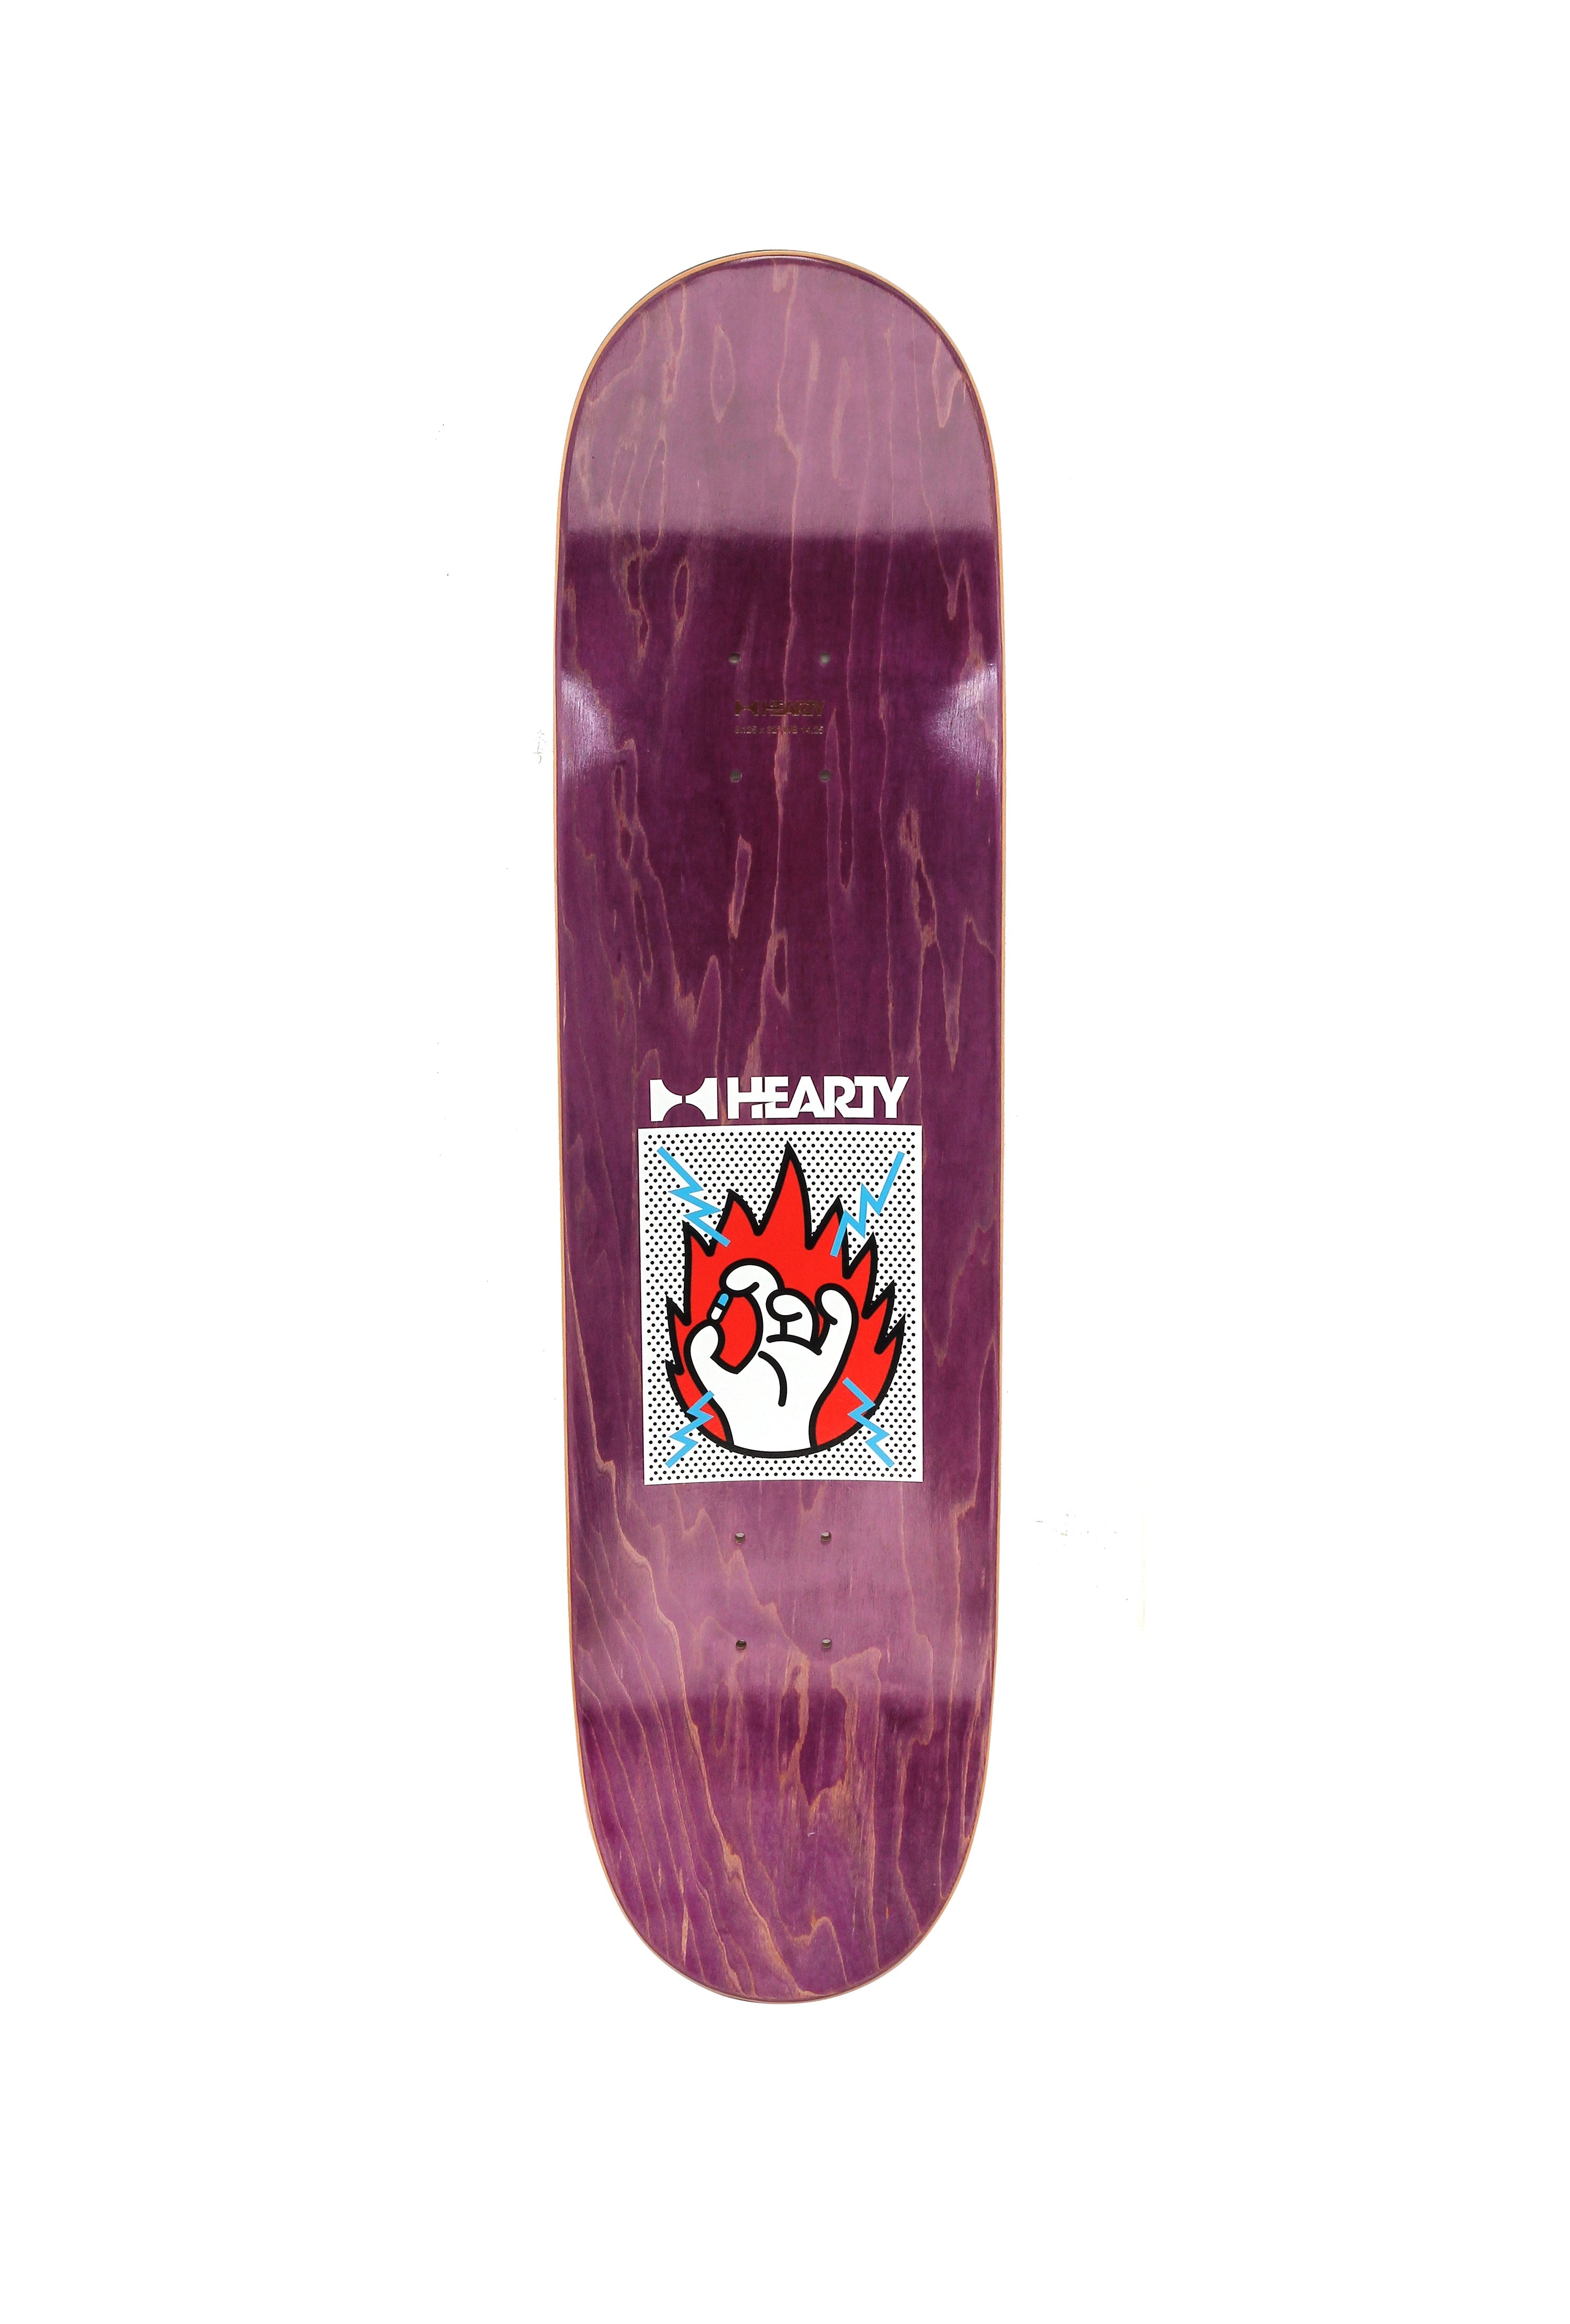 Hearty Skateboard Deck Take a Chill Pill Teal/Orange- 8.0", 8.125" & 8.25"